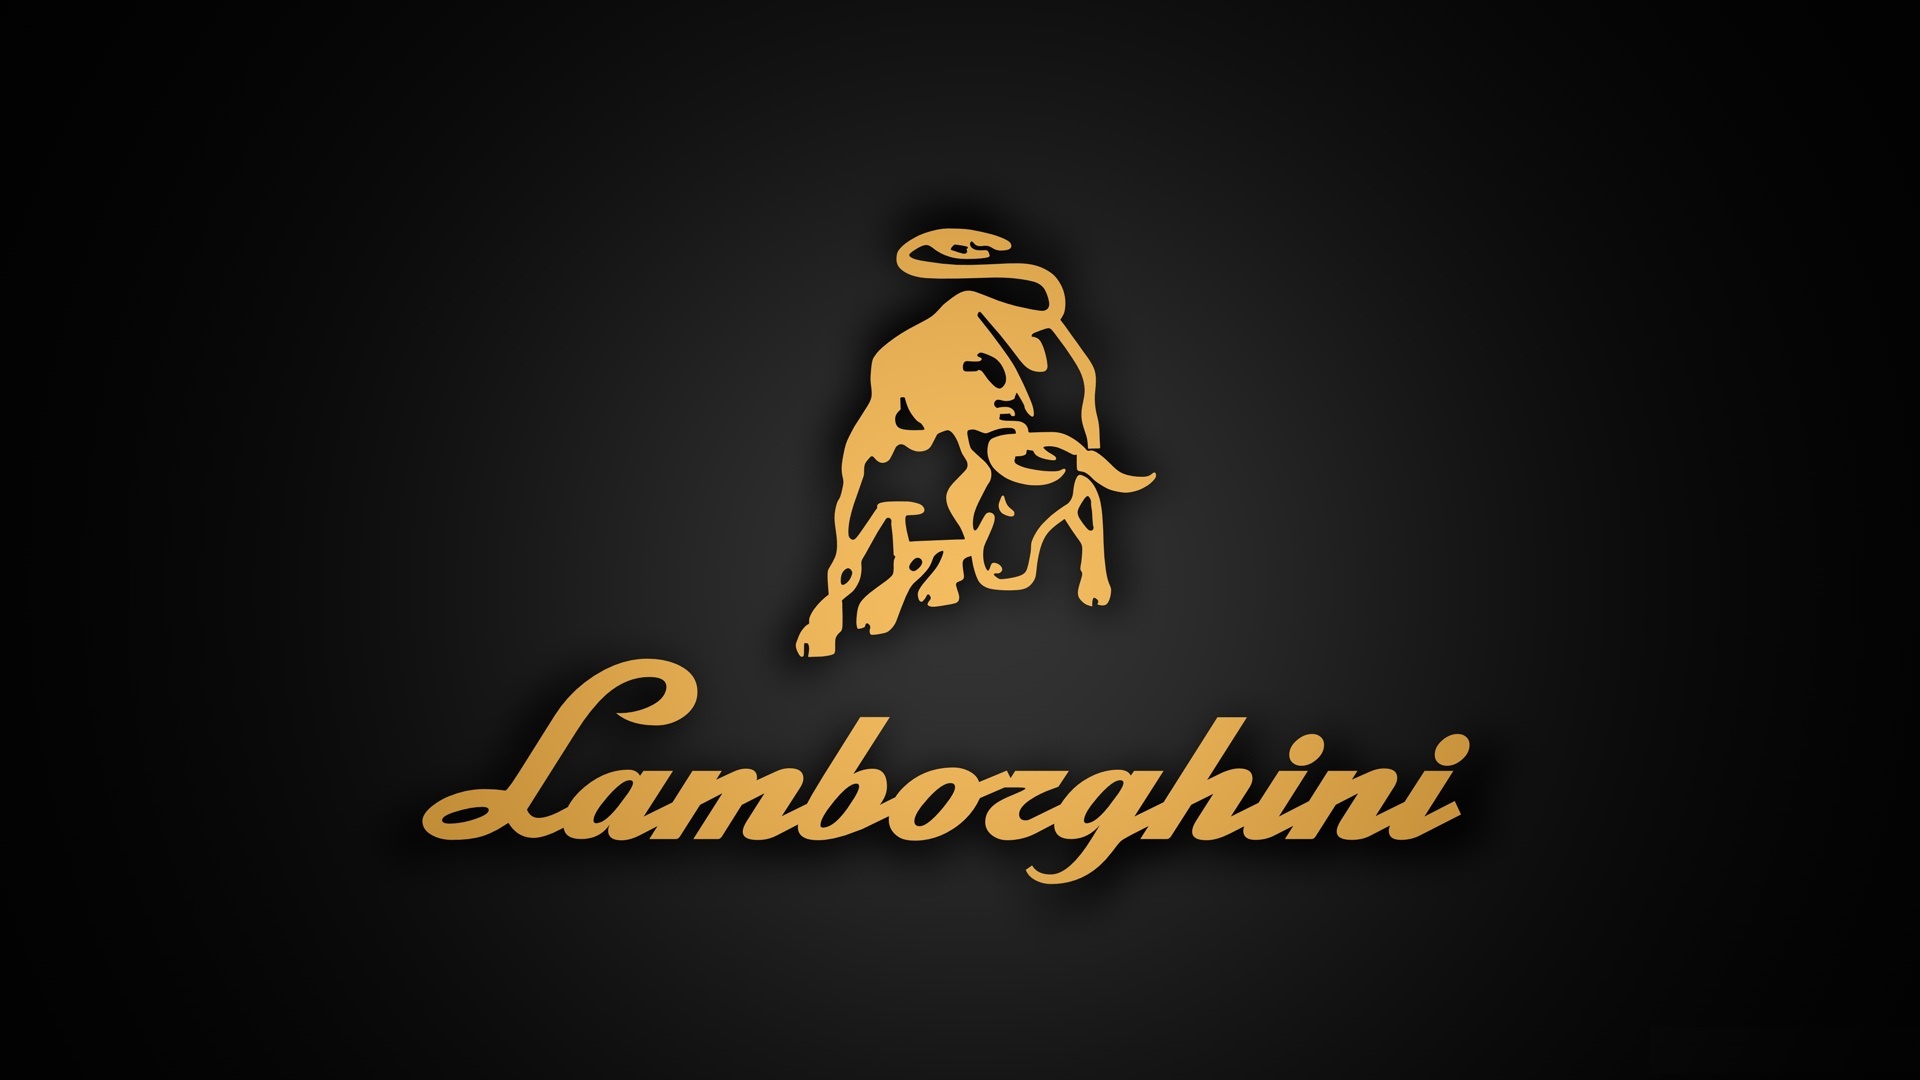 Lamborghini Logo, High-definition wallpapers, Luxury brand, Stylish design, 1920x1080 Full HD Desktop